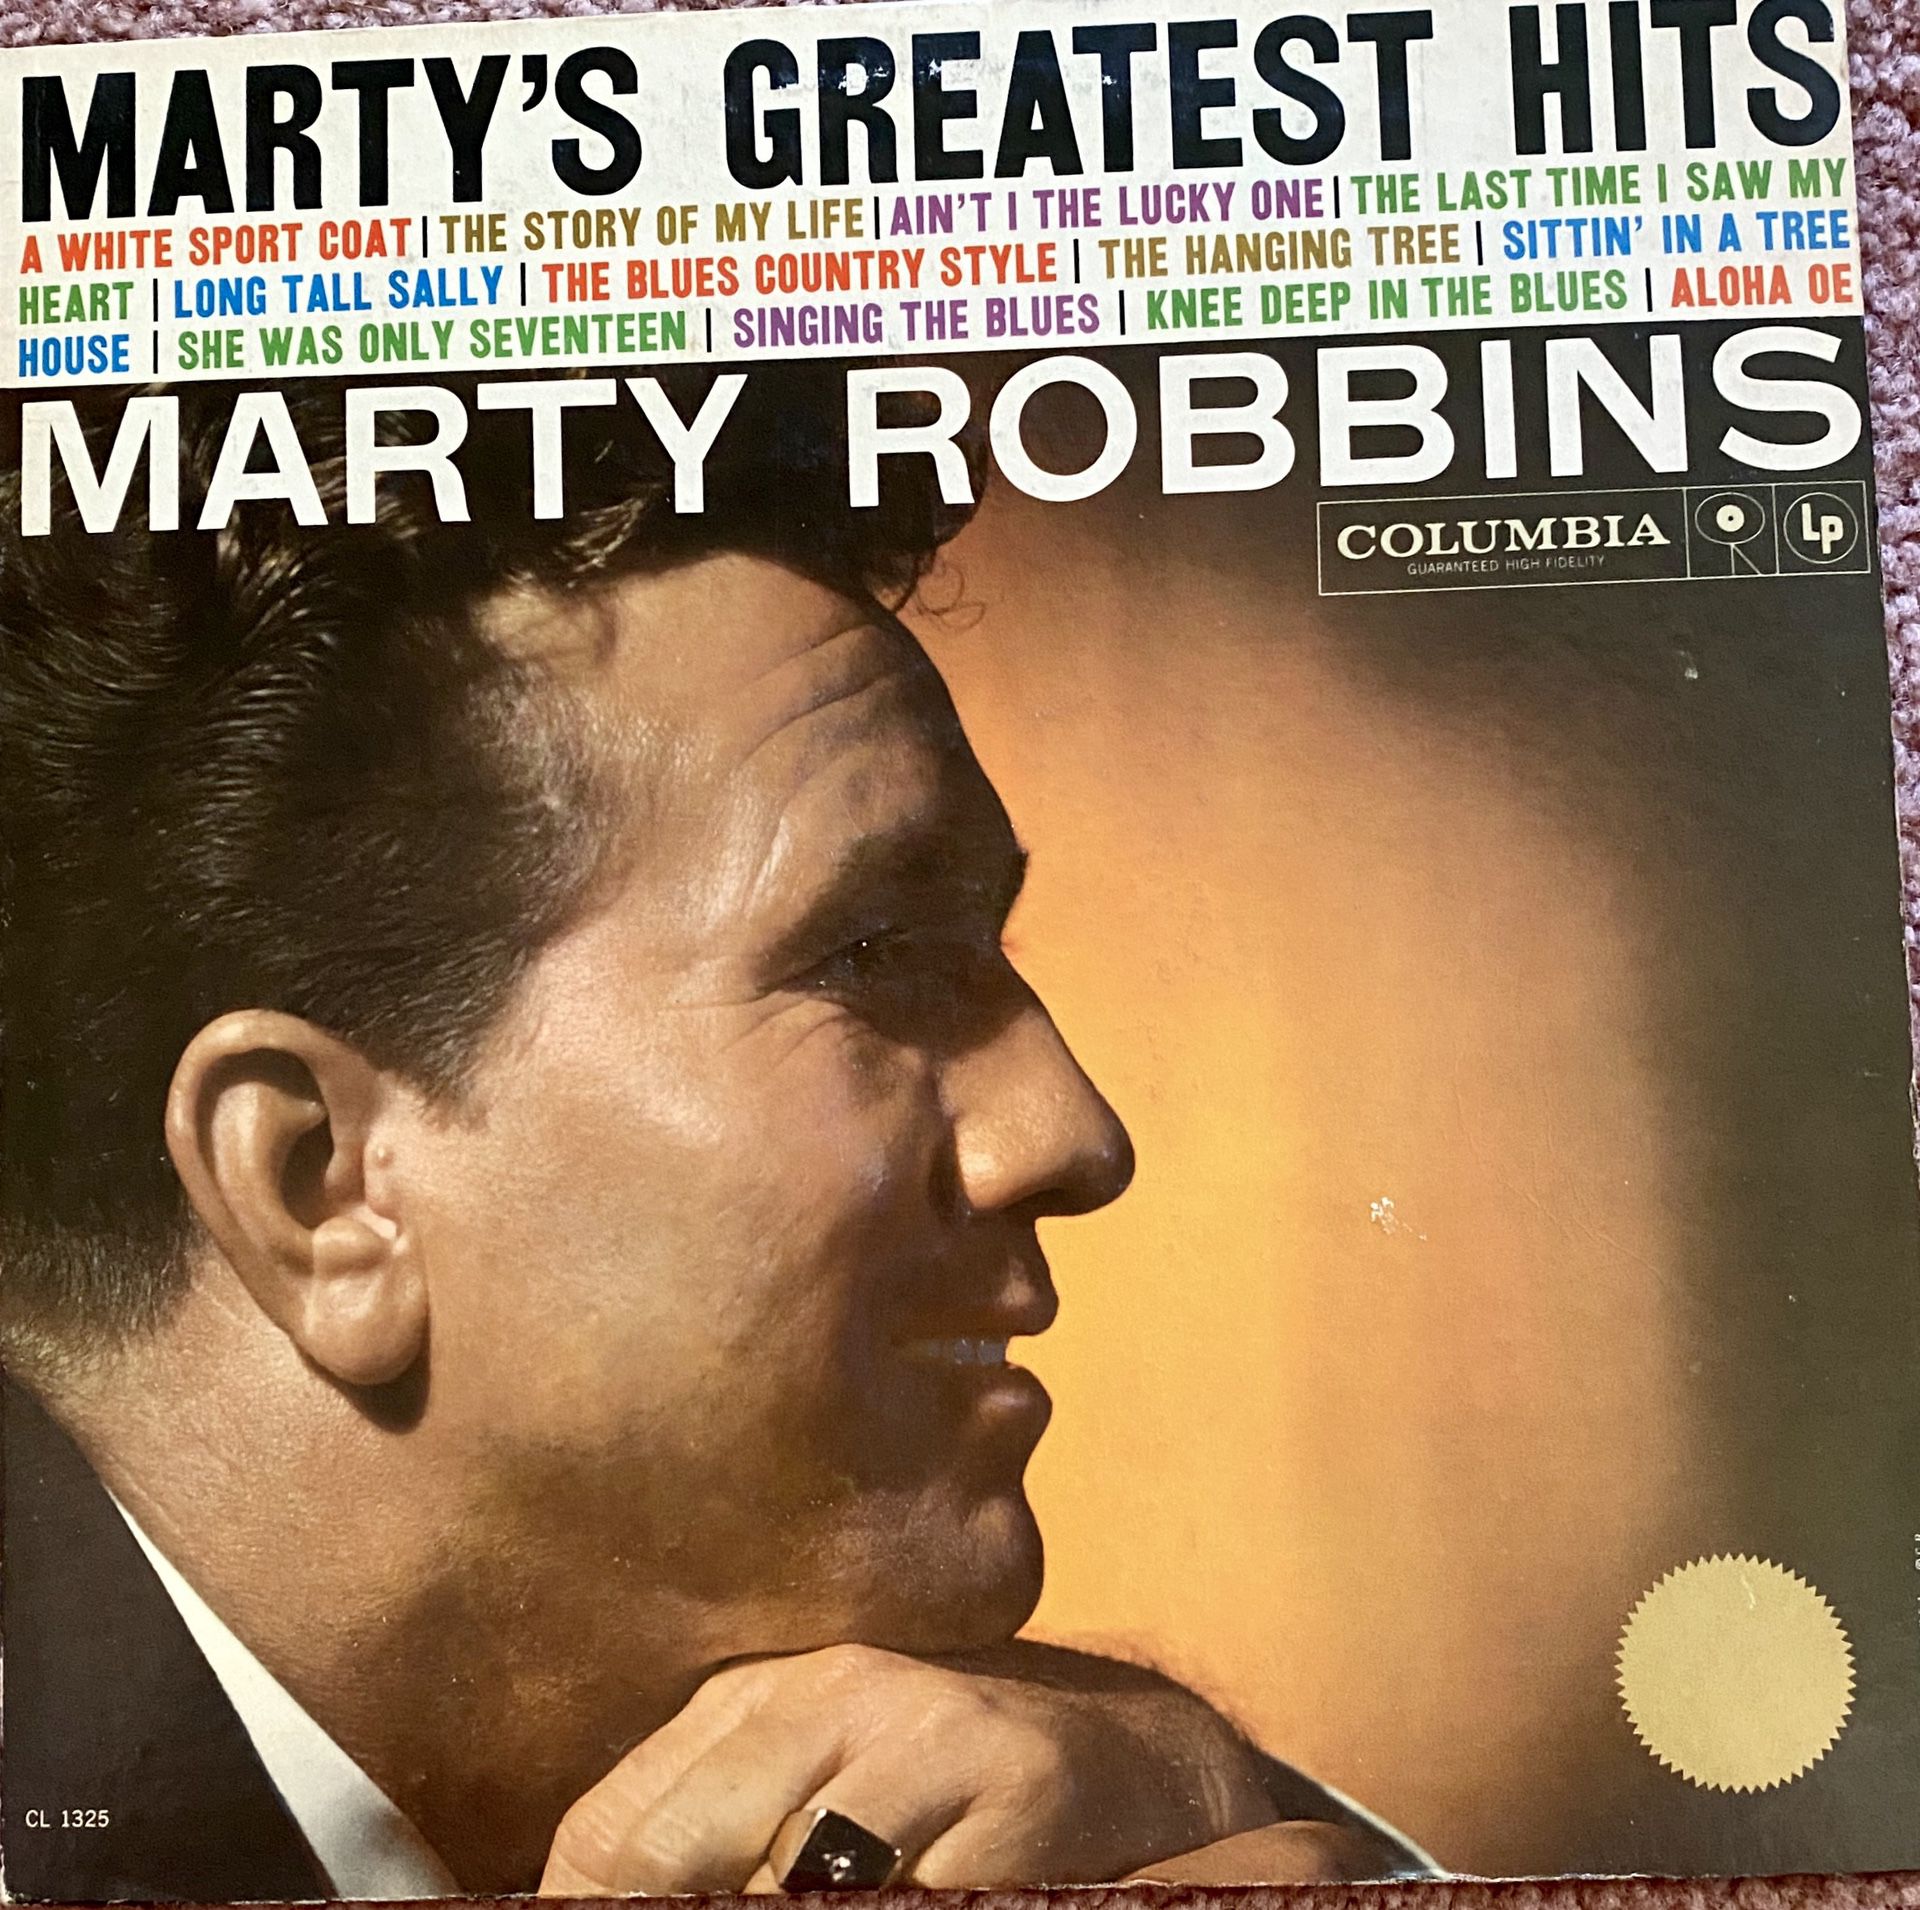 Marty Robbins “Marty’s Greatest Hits” Vinyl Album $8